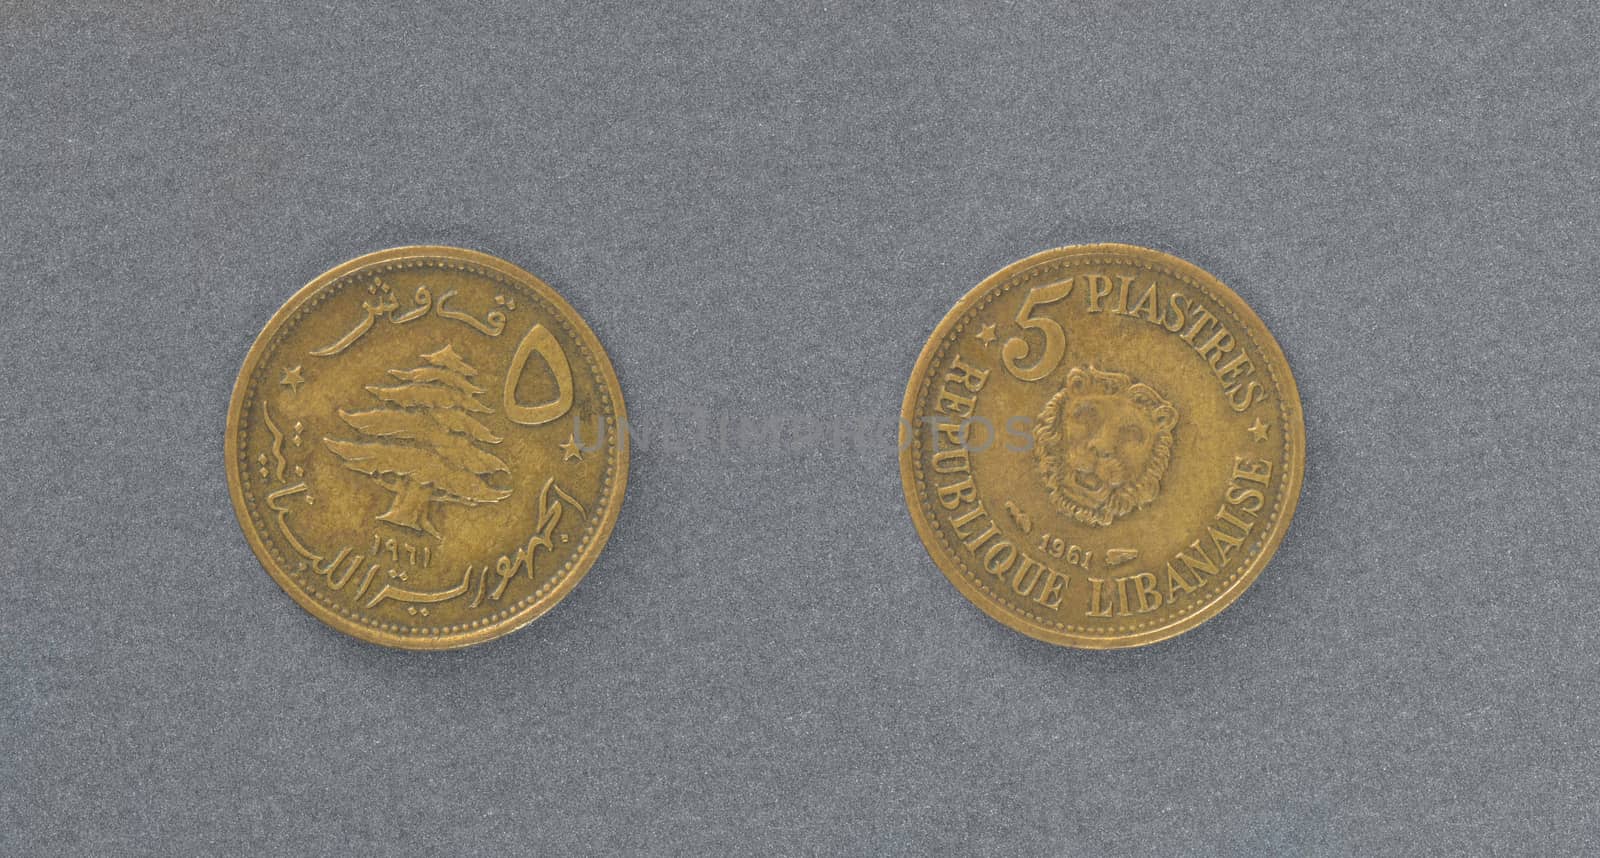 Lebanon fife piastres brass coin. Path for both coins.